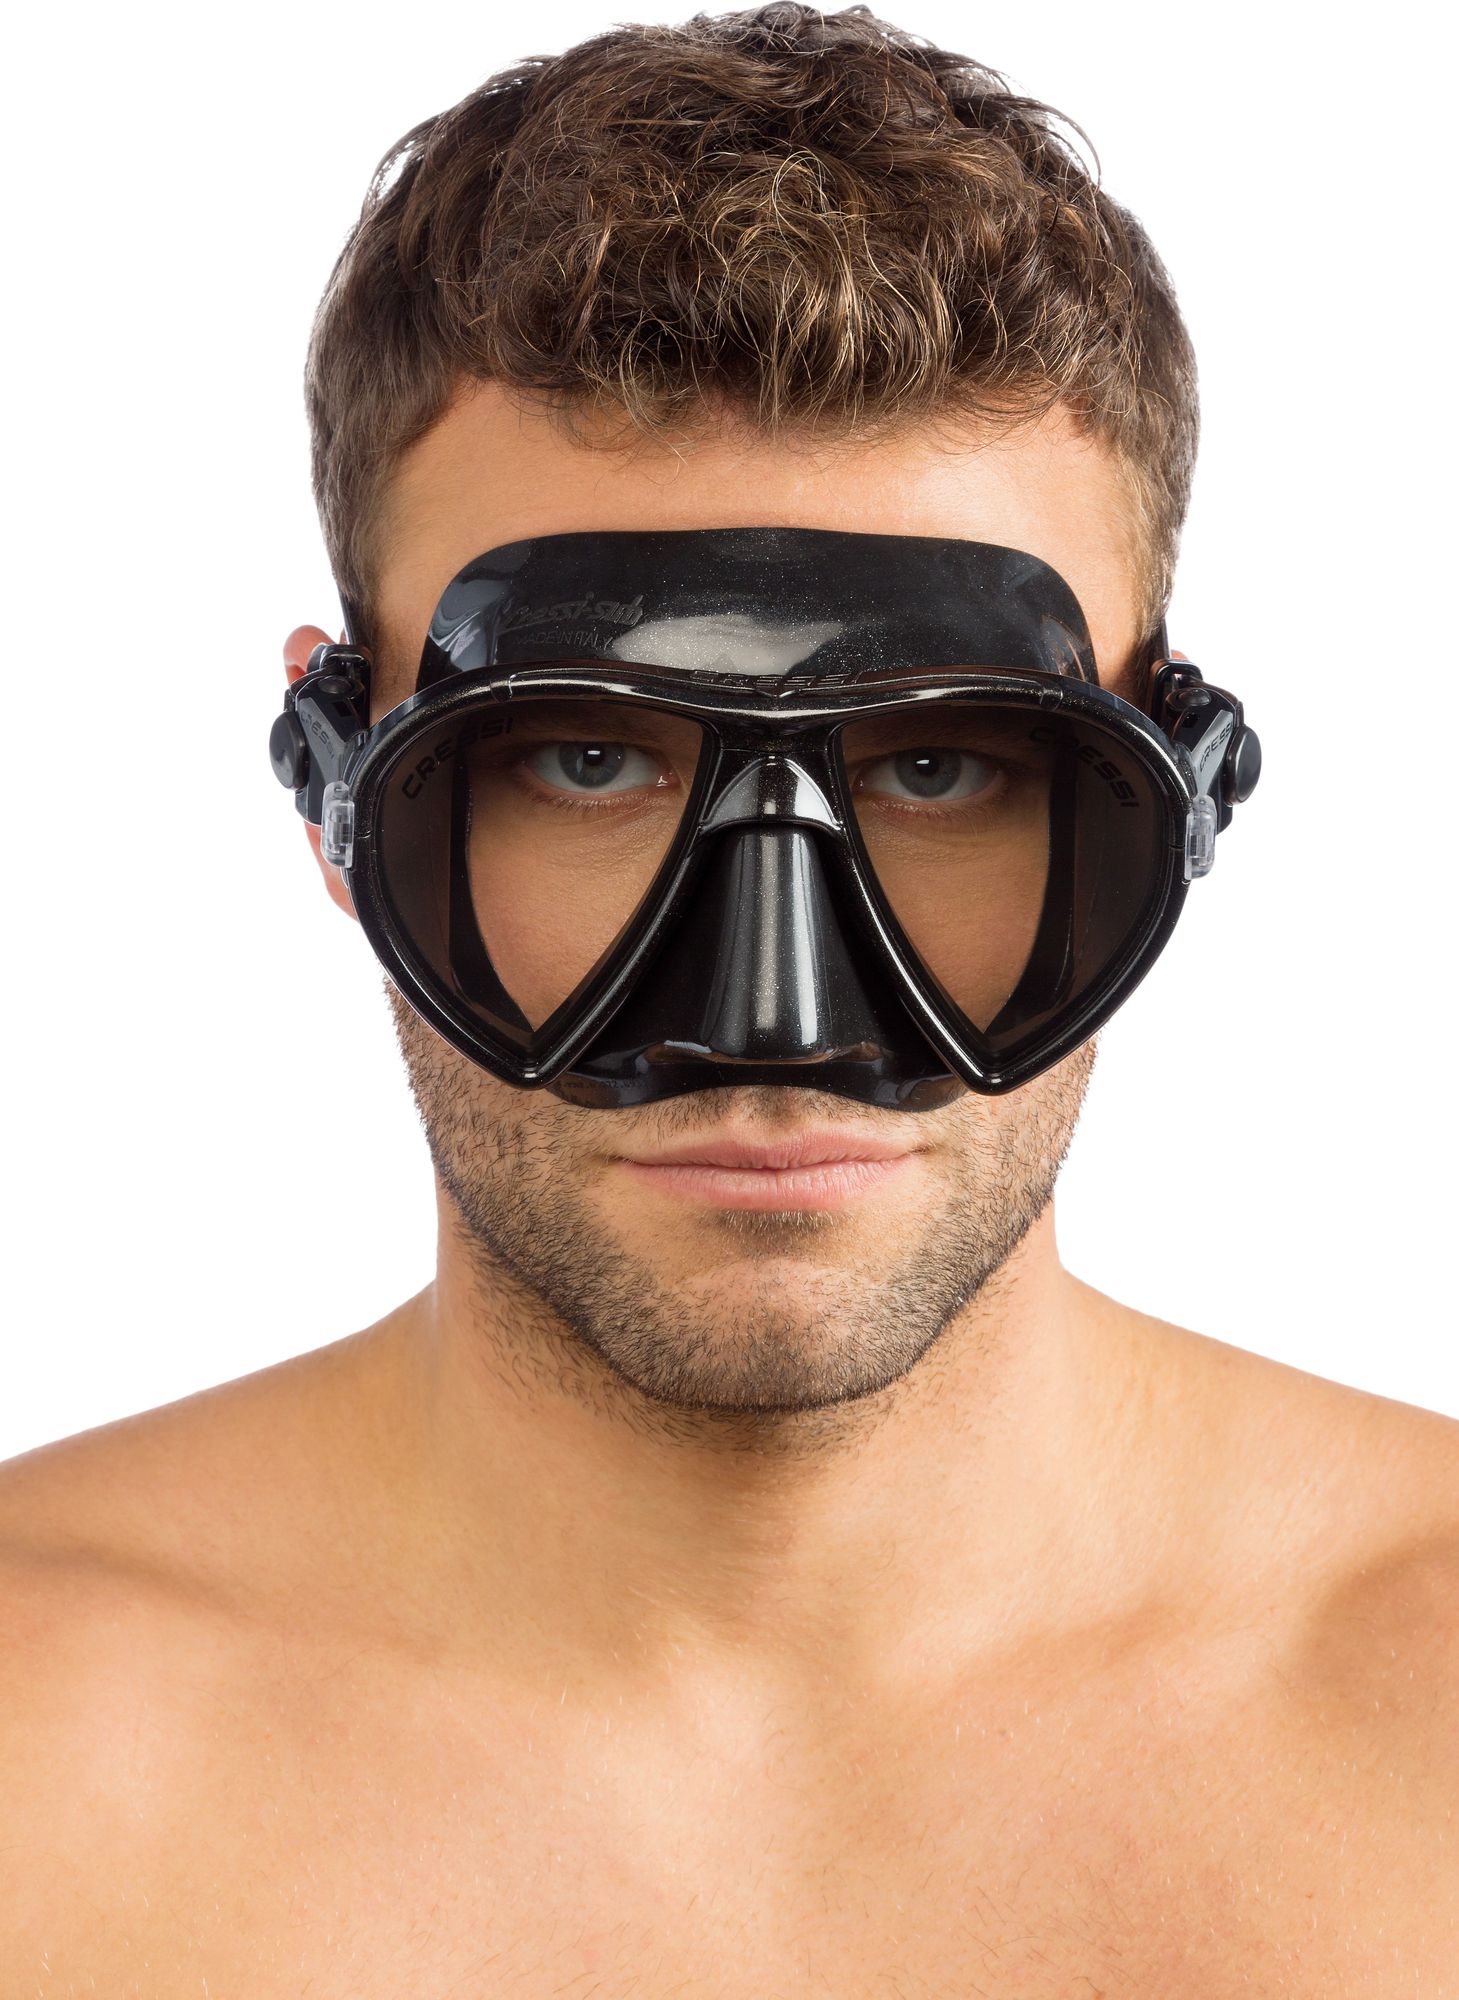 Ocean Mask - Scuba mask, Snorkelling mask